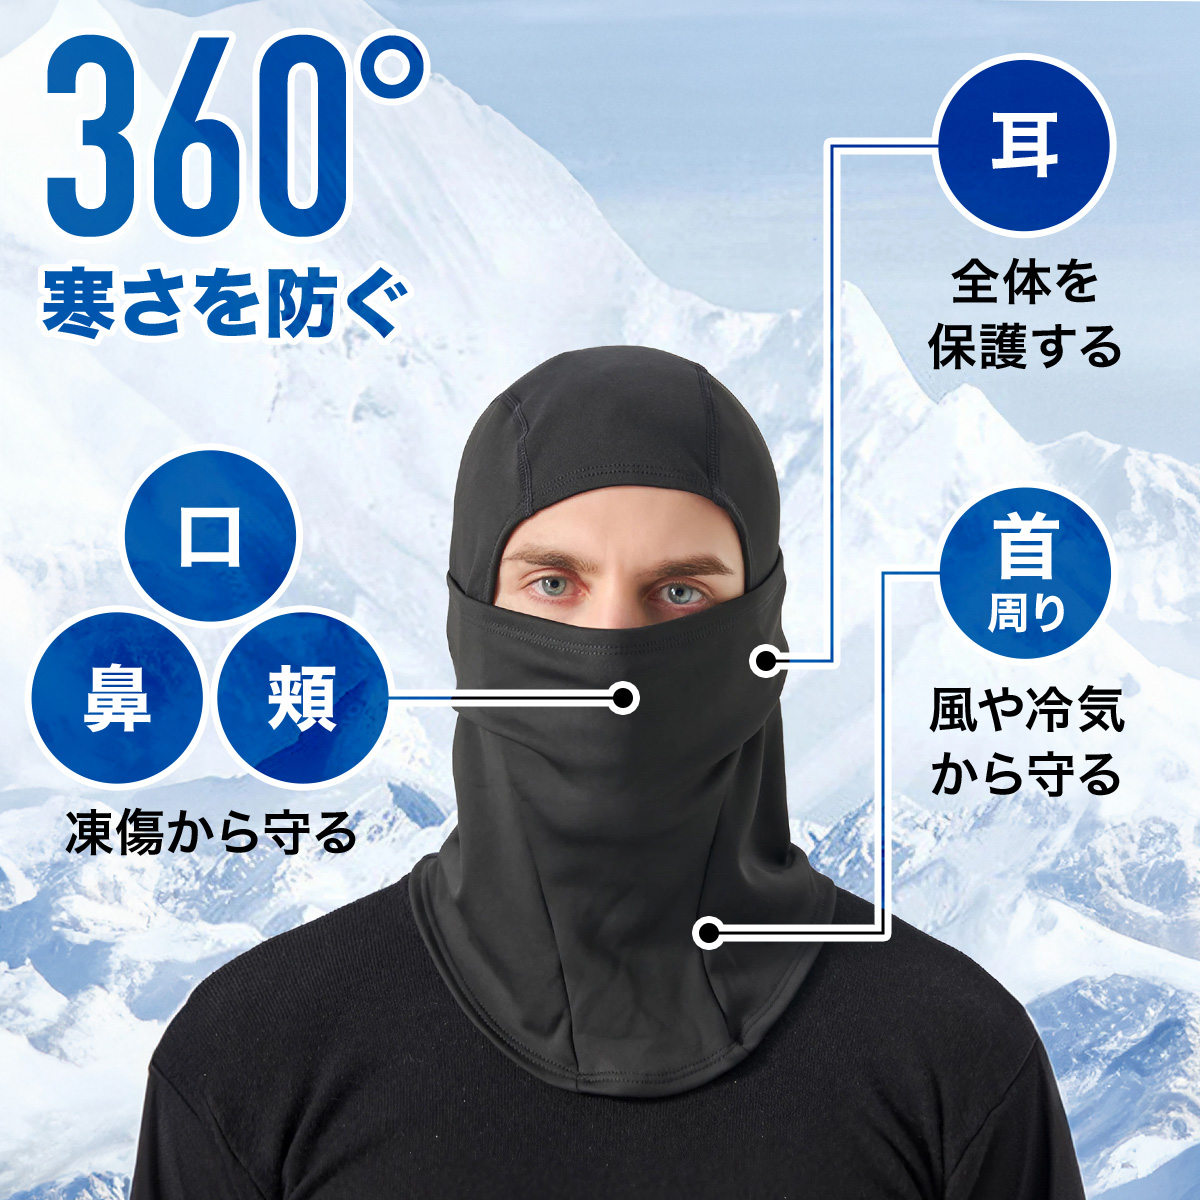  neck warmer men's hood warmer protection against cold face mask face warmer neck gator bike ski snowboard fishing 